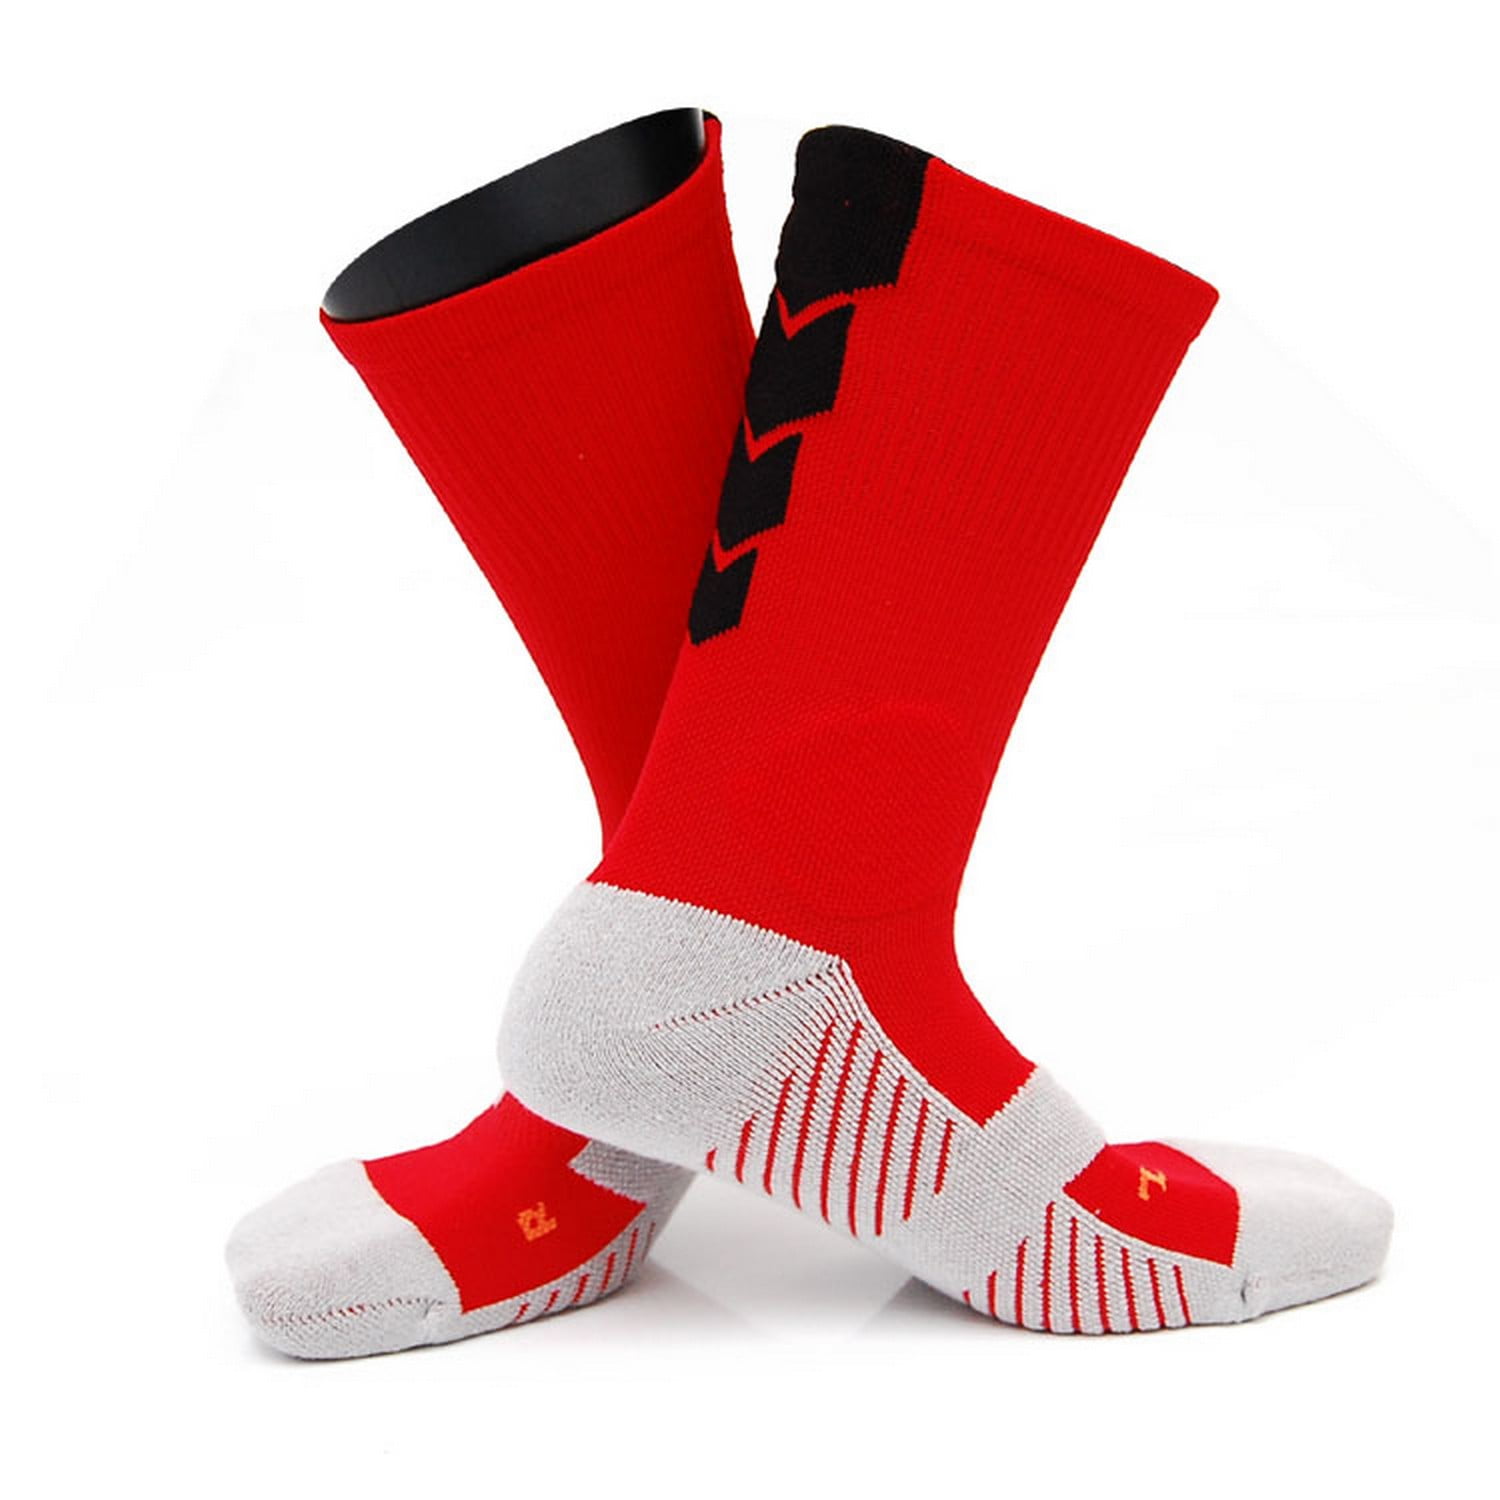 LLAMA TWINS Unisex Compression Socks Athletic Tube Stockings Sport Long Socks One Size 